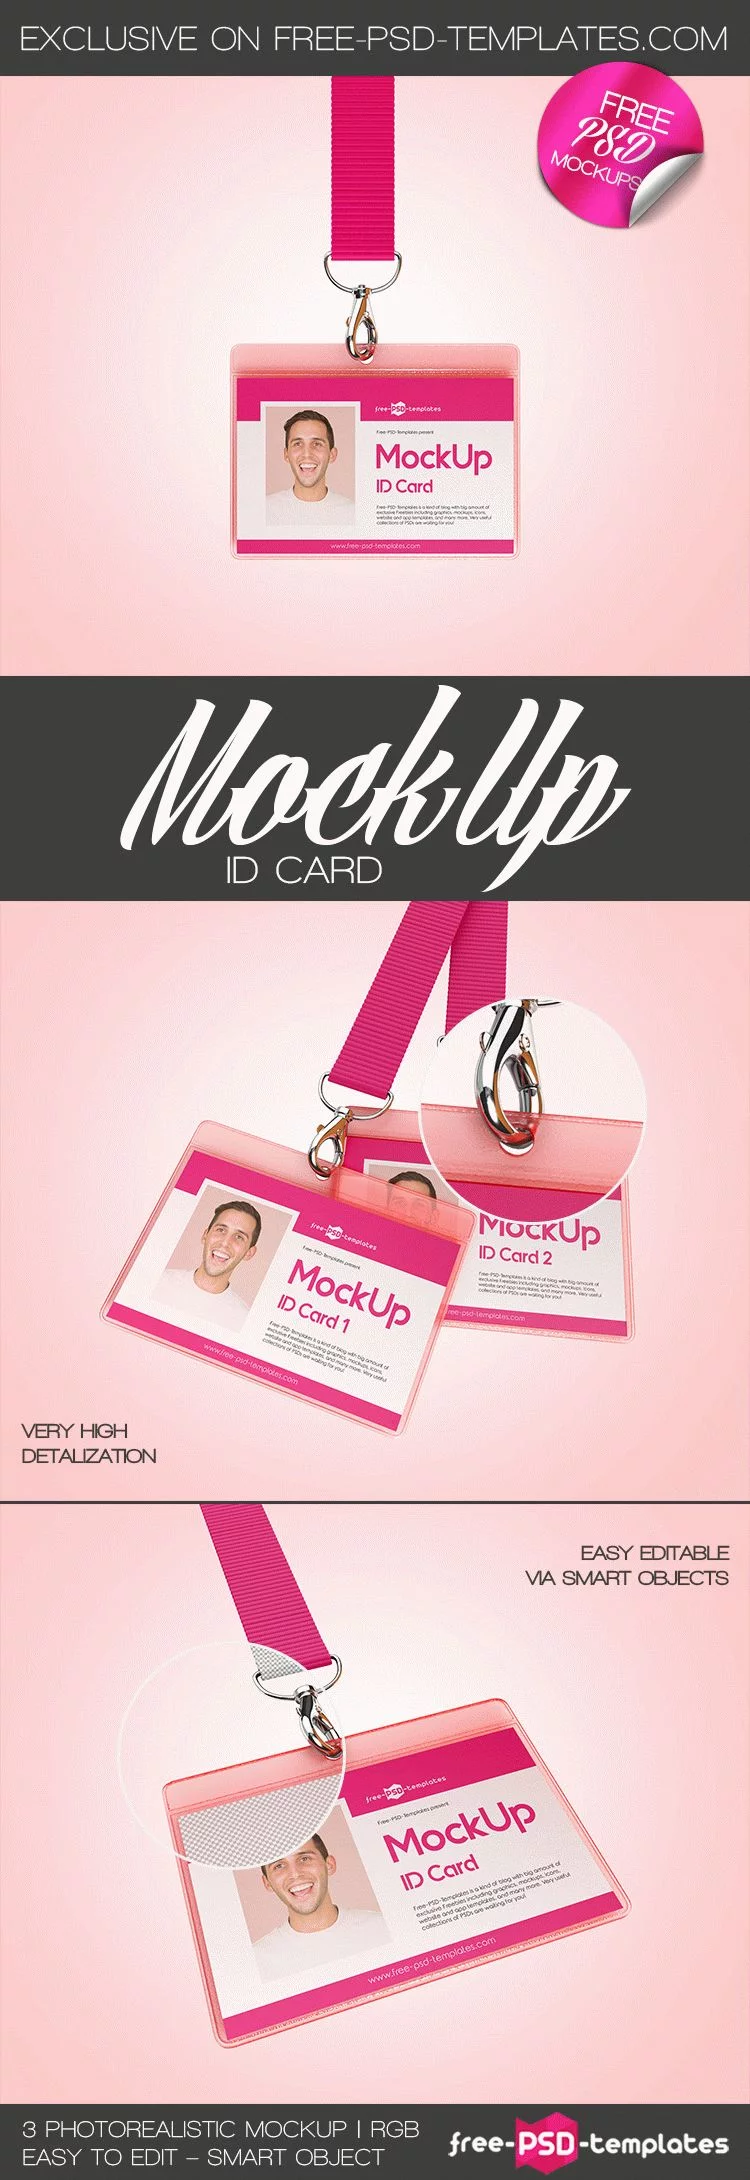 Free ID Card Mockup in PSD